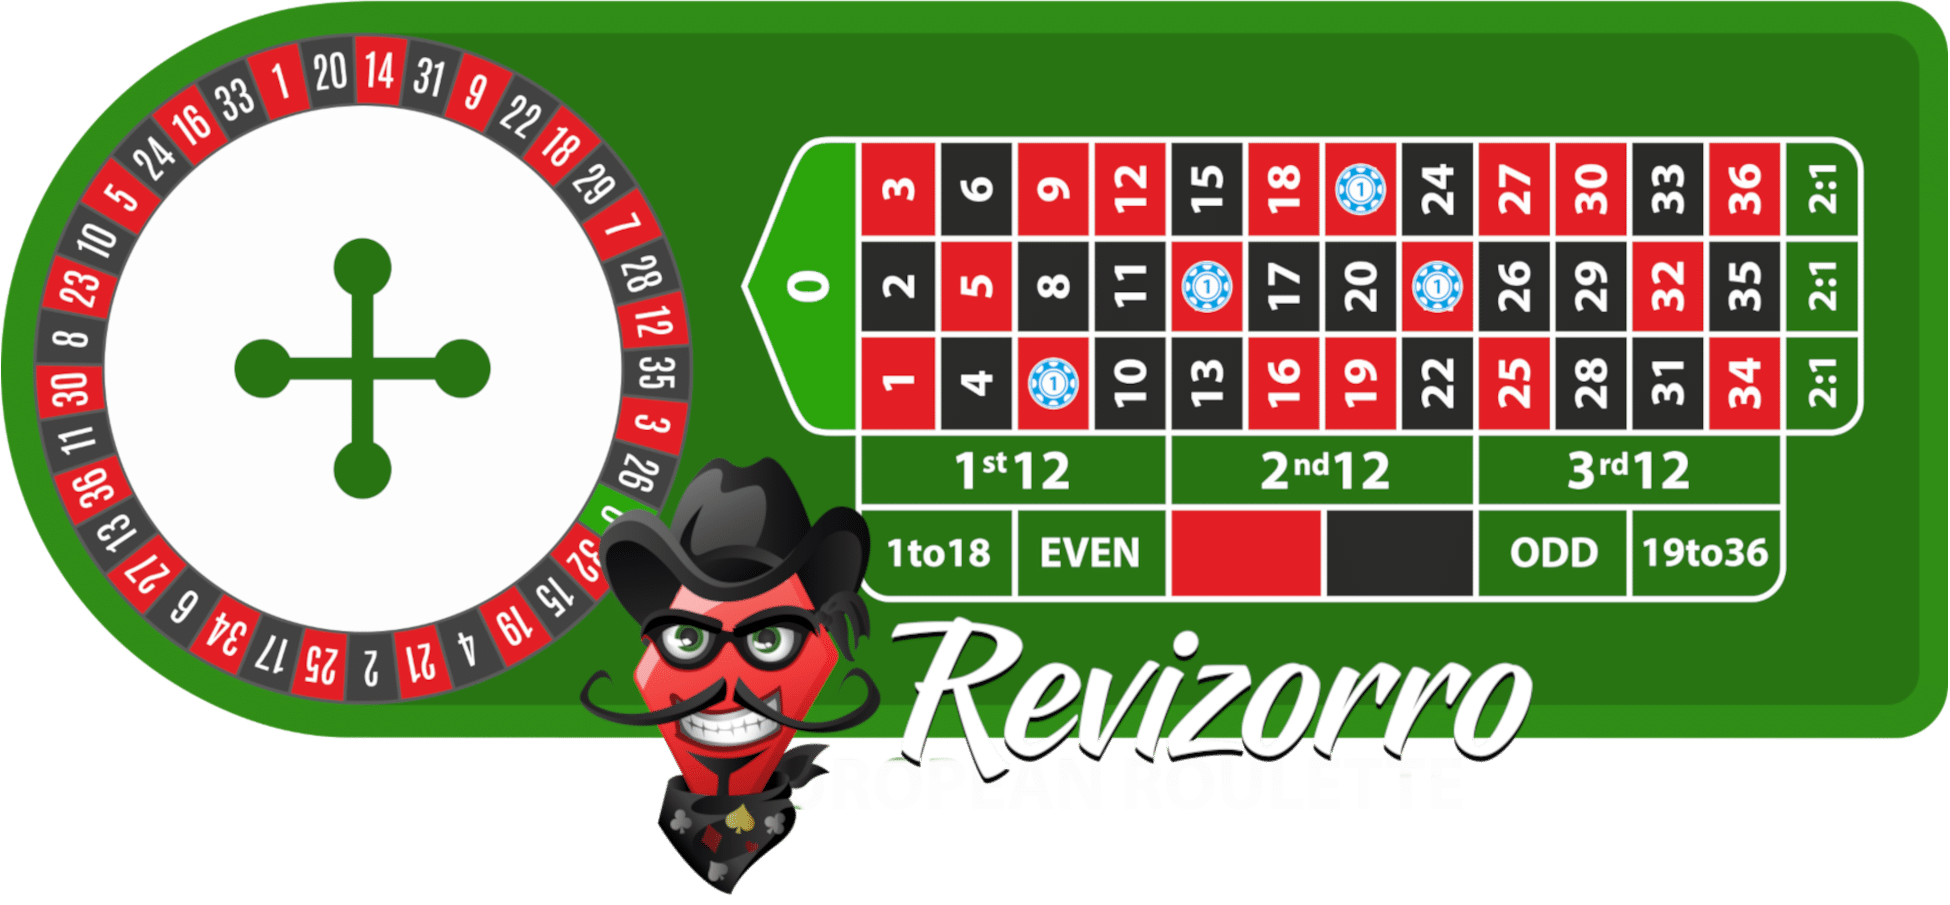 Europa ruleta revizorro casinos